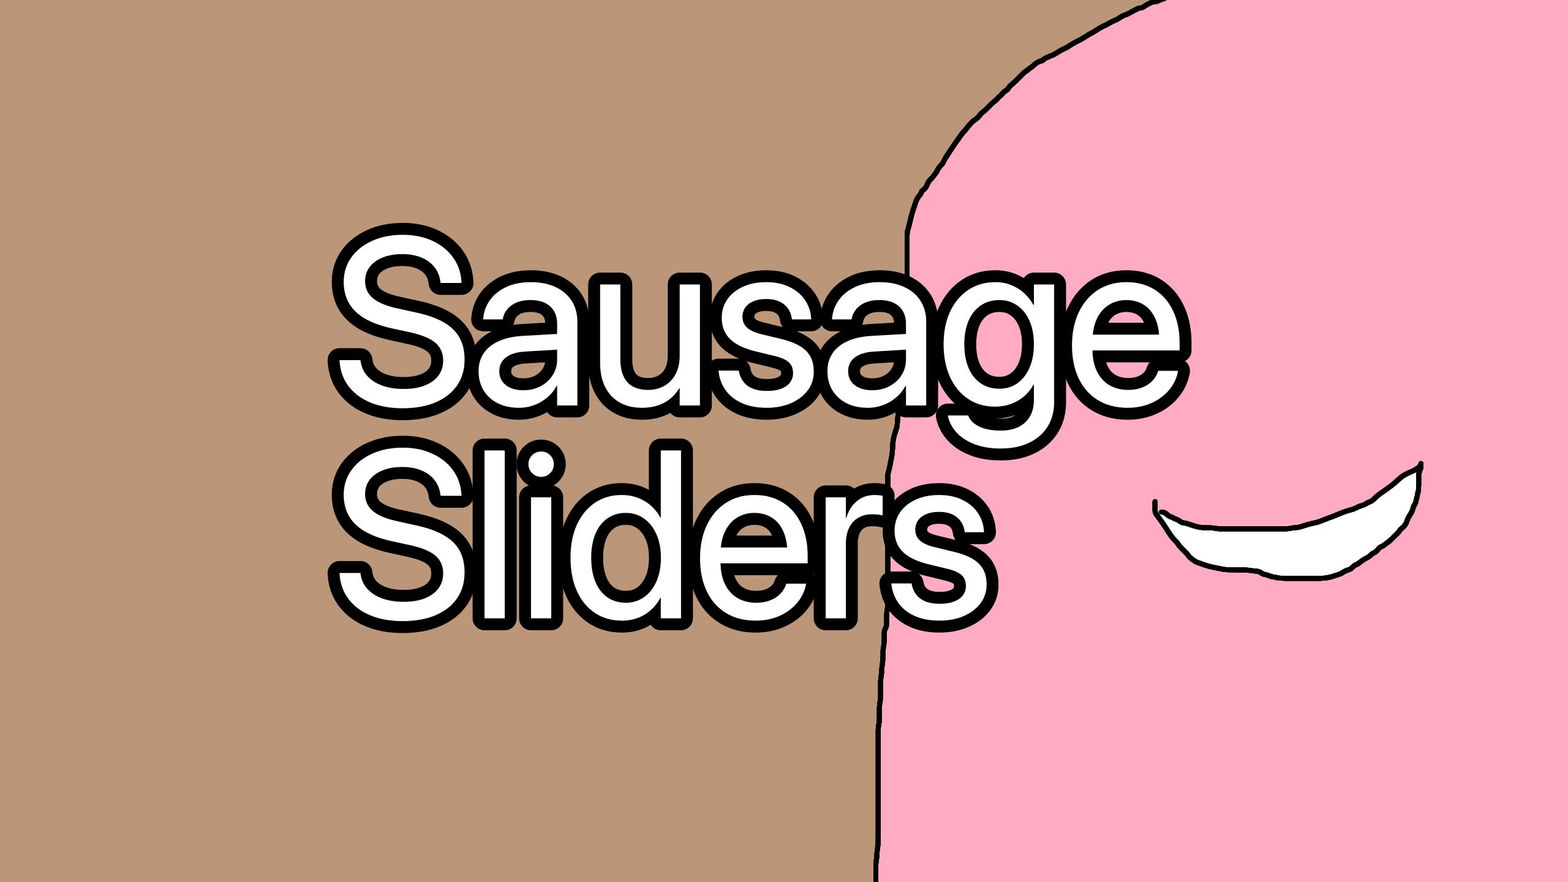 Sausage Sliders REMARSTED